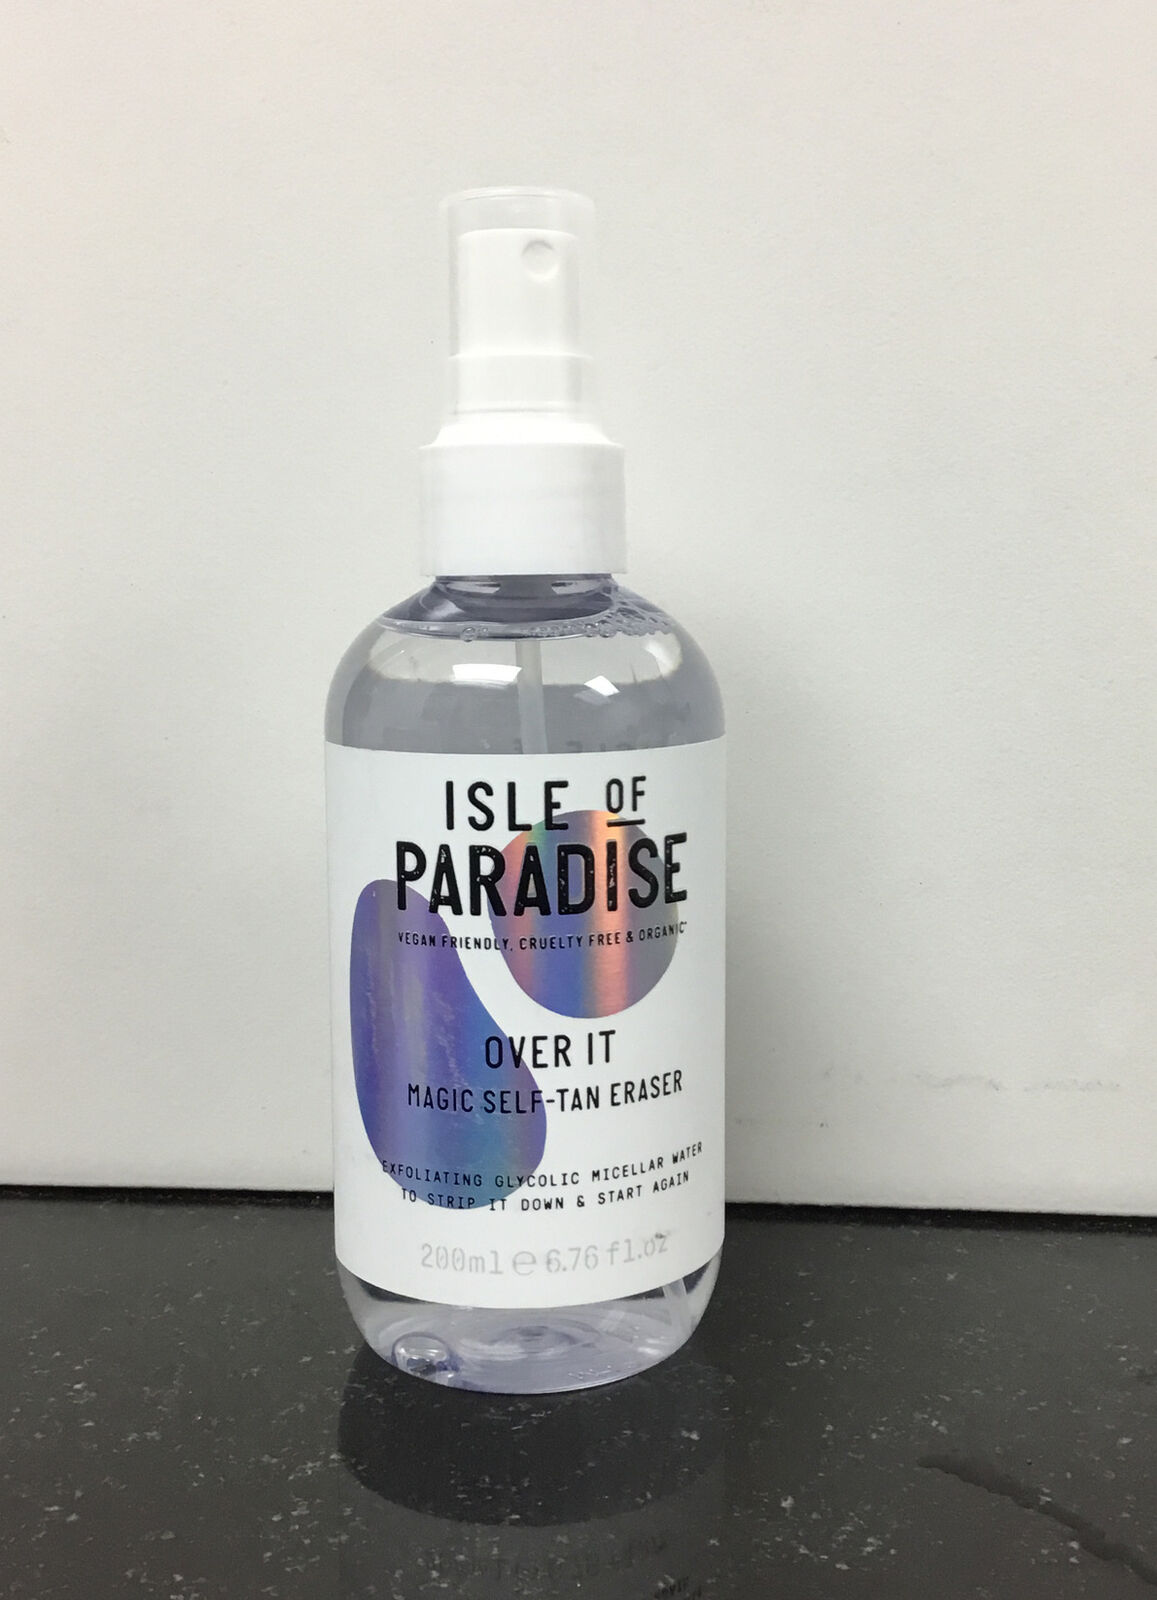 ISLE OF paradise over it magic self tan eraser 6.76 oz NEW